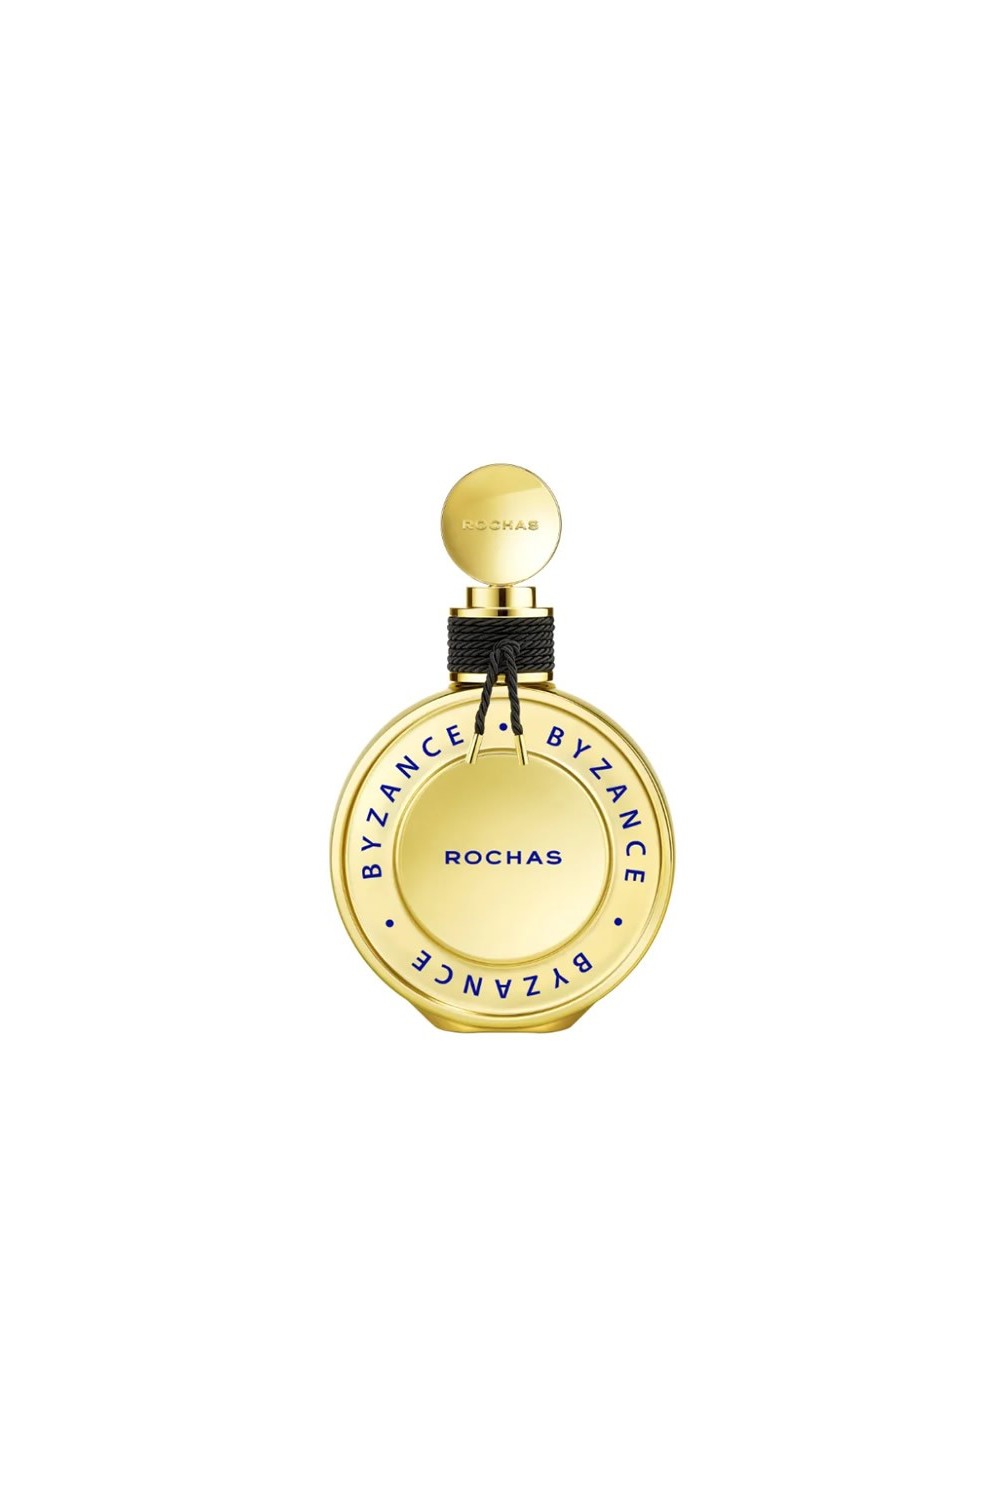 Rochas Byzance Gold Eau De Perfume Spray 90ml